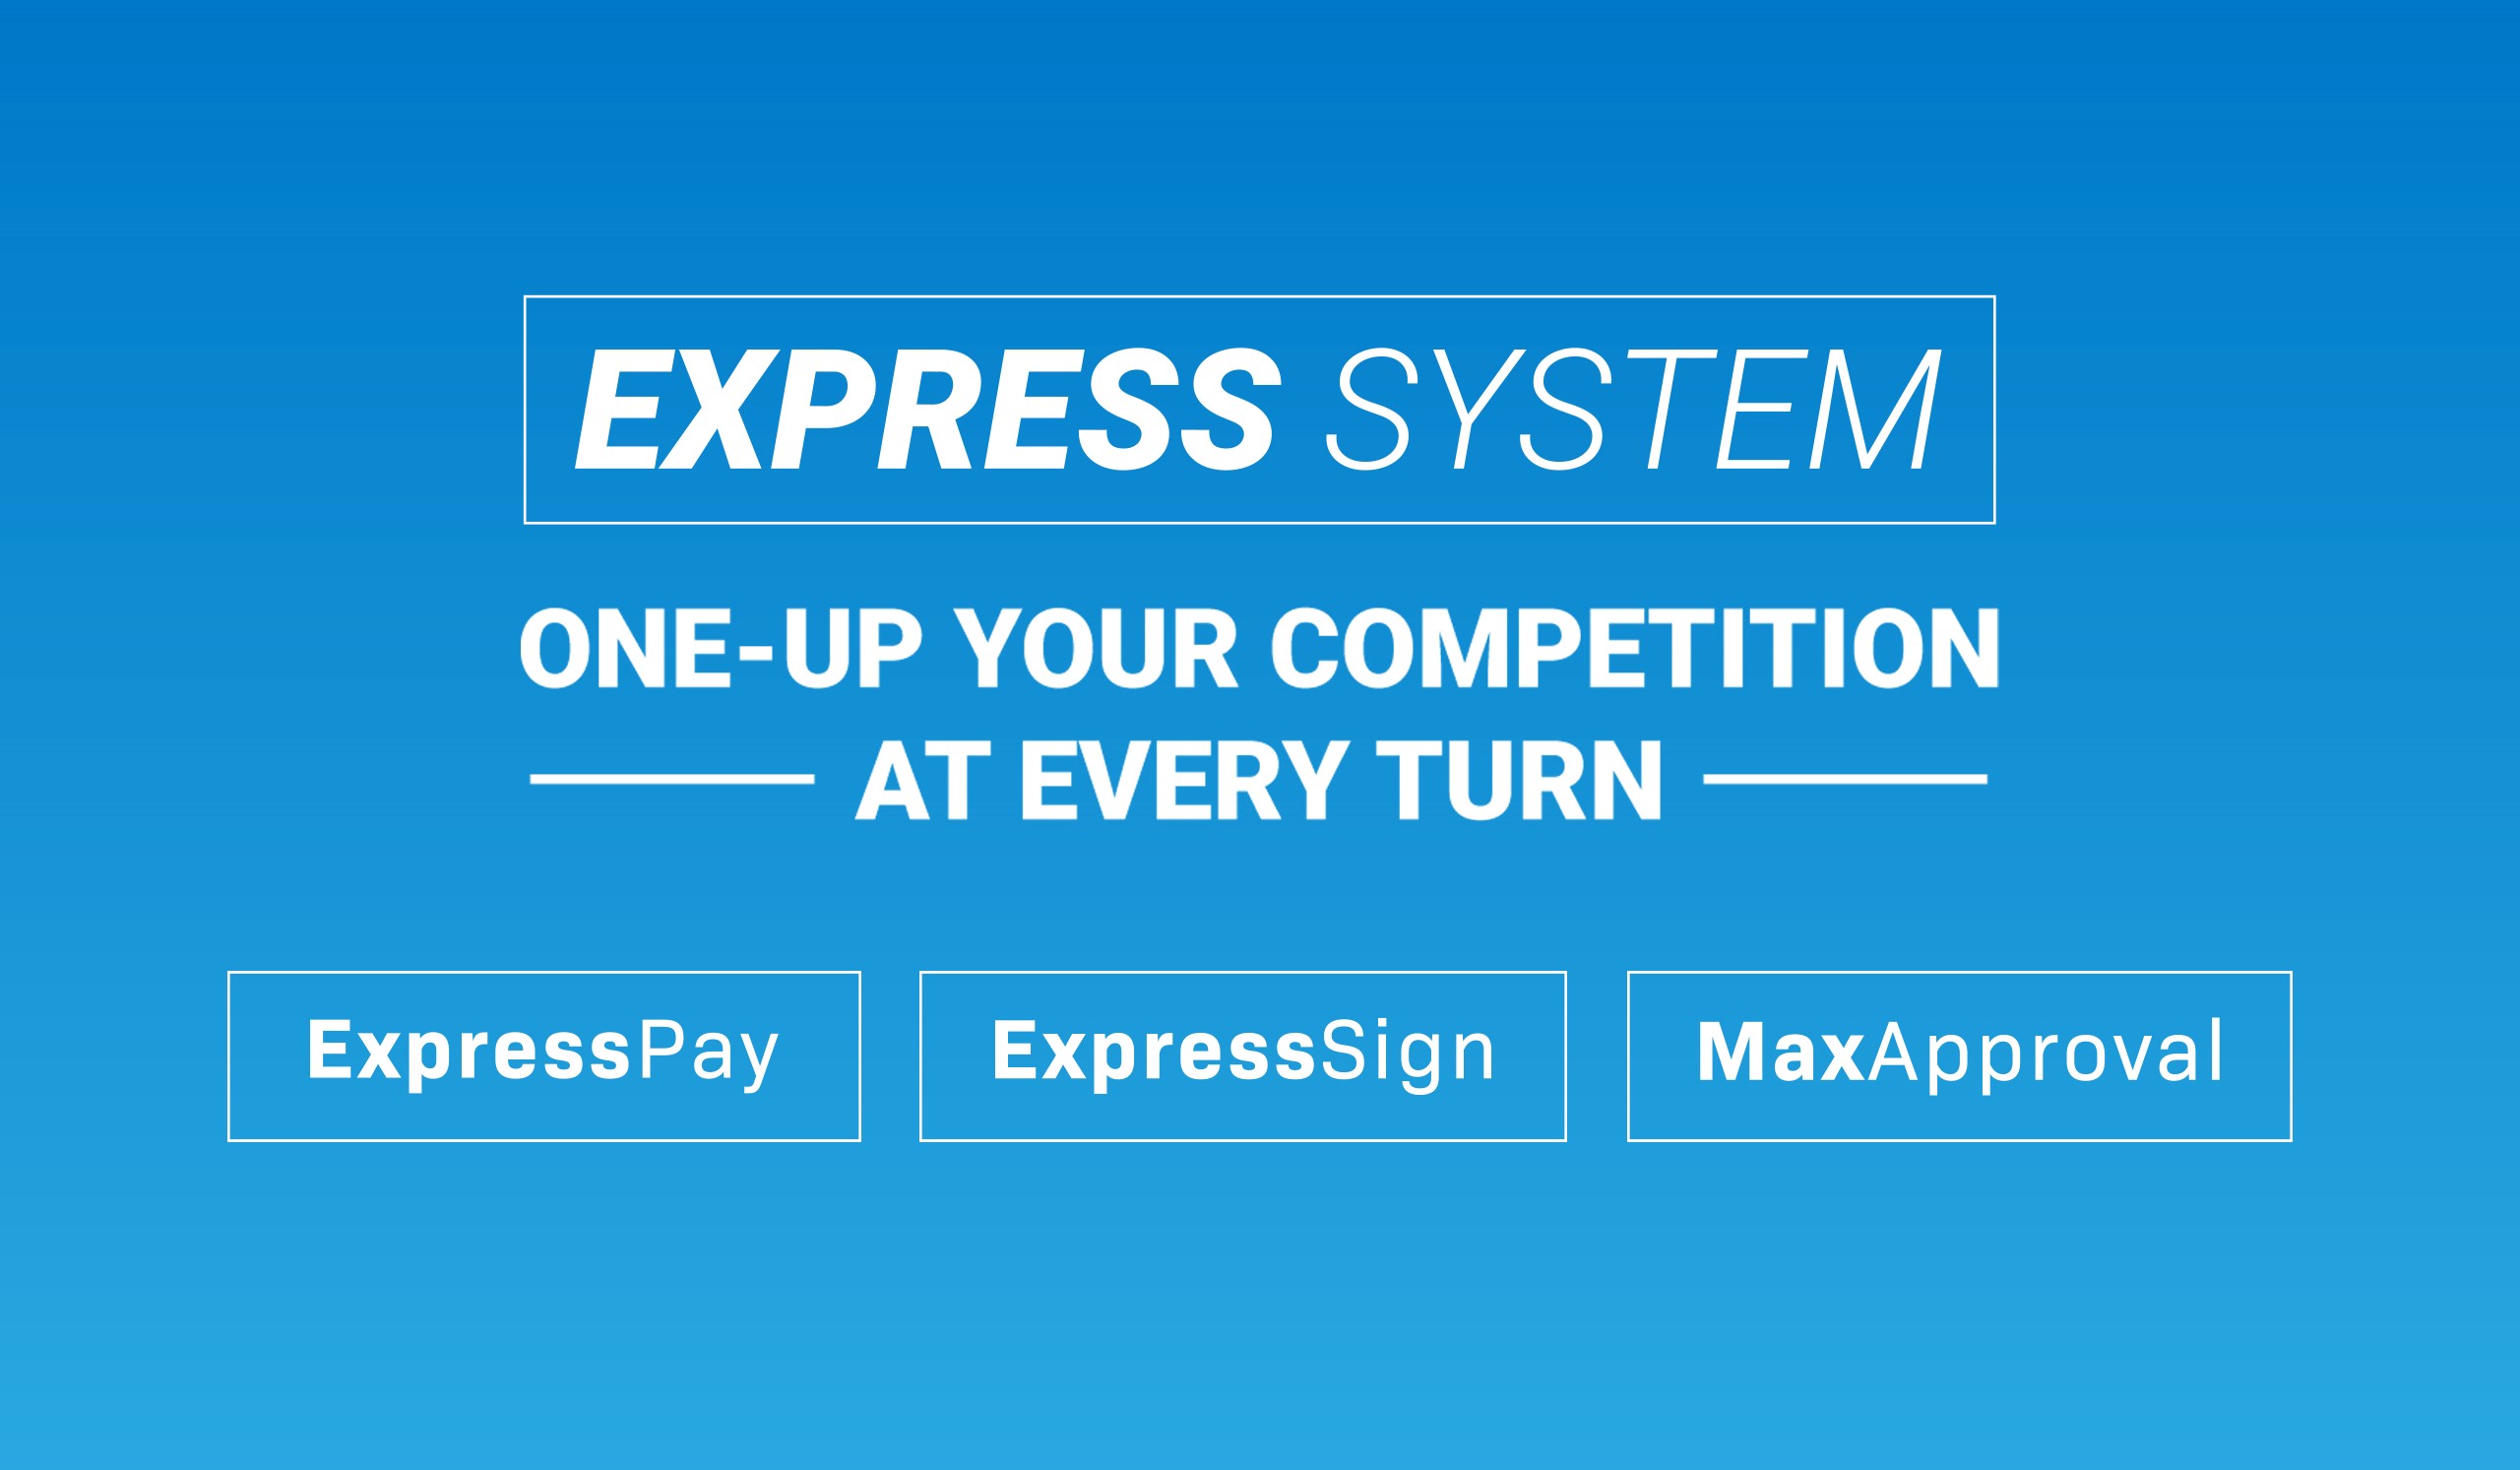 Express System